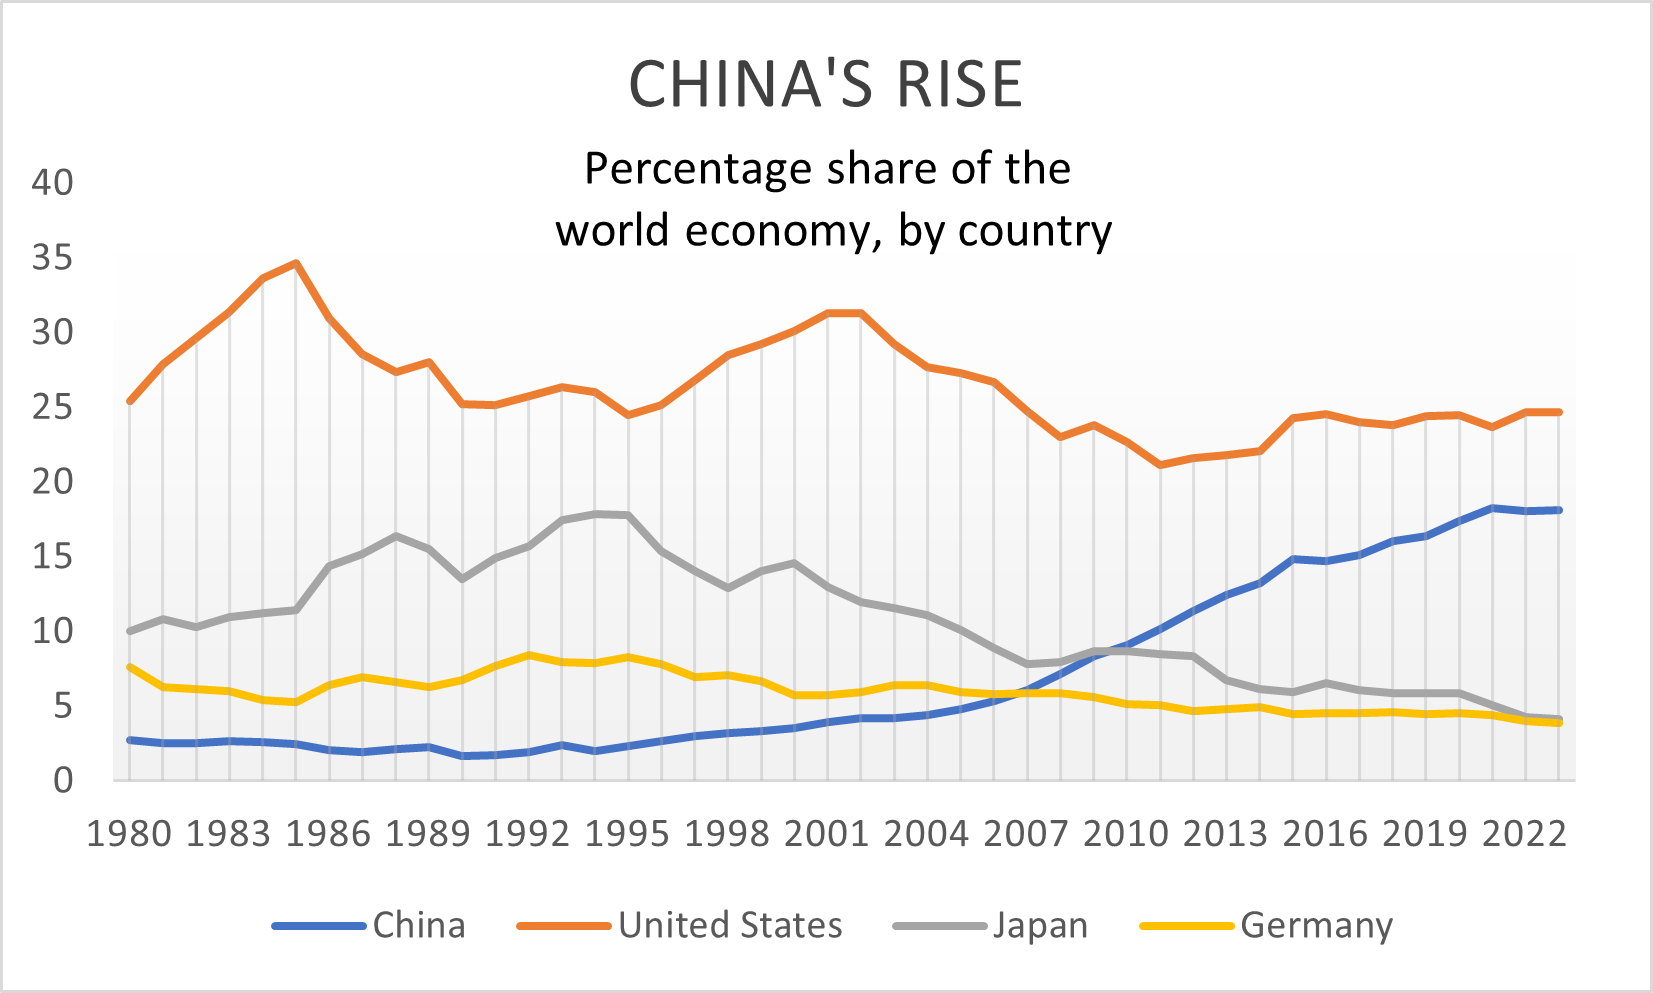 China's rise